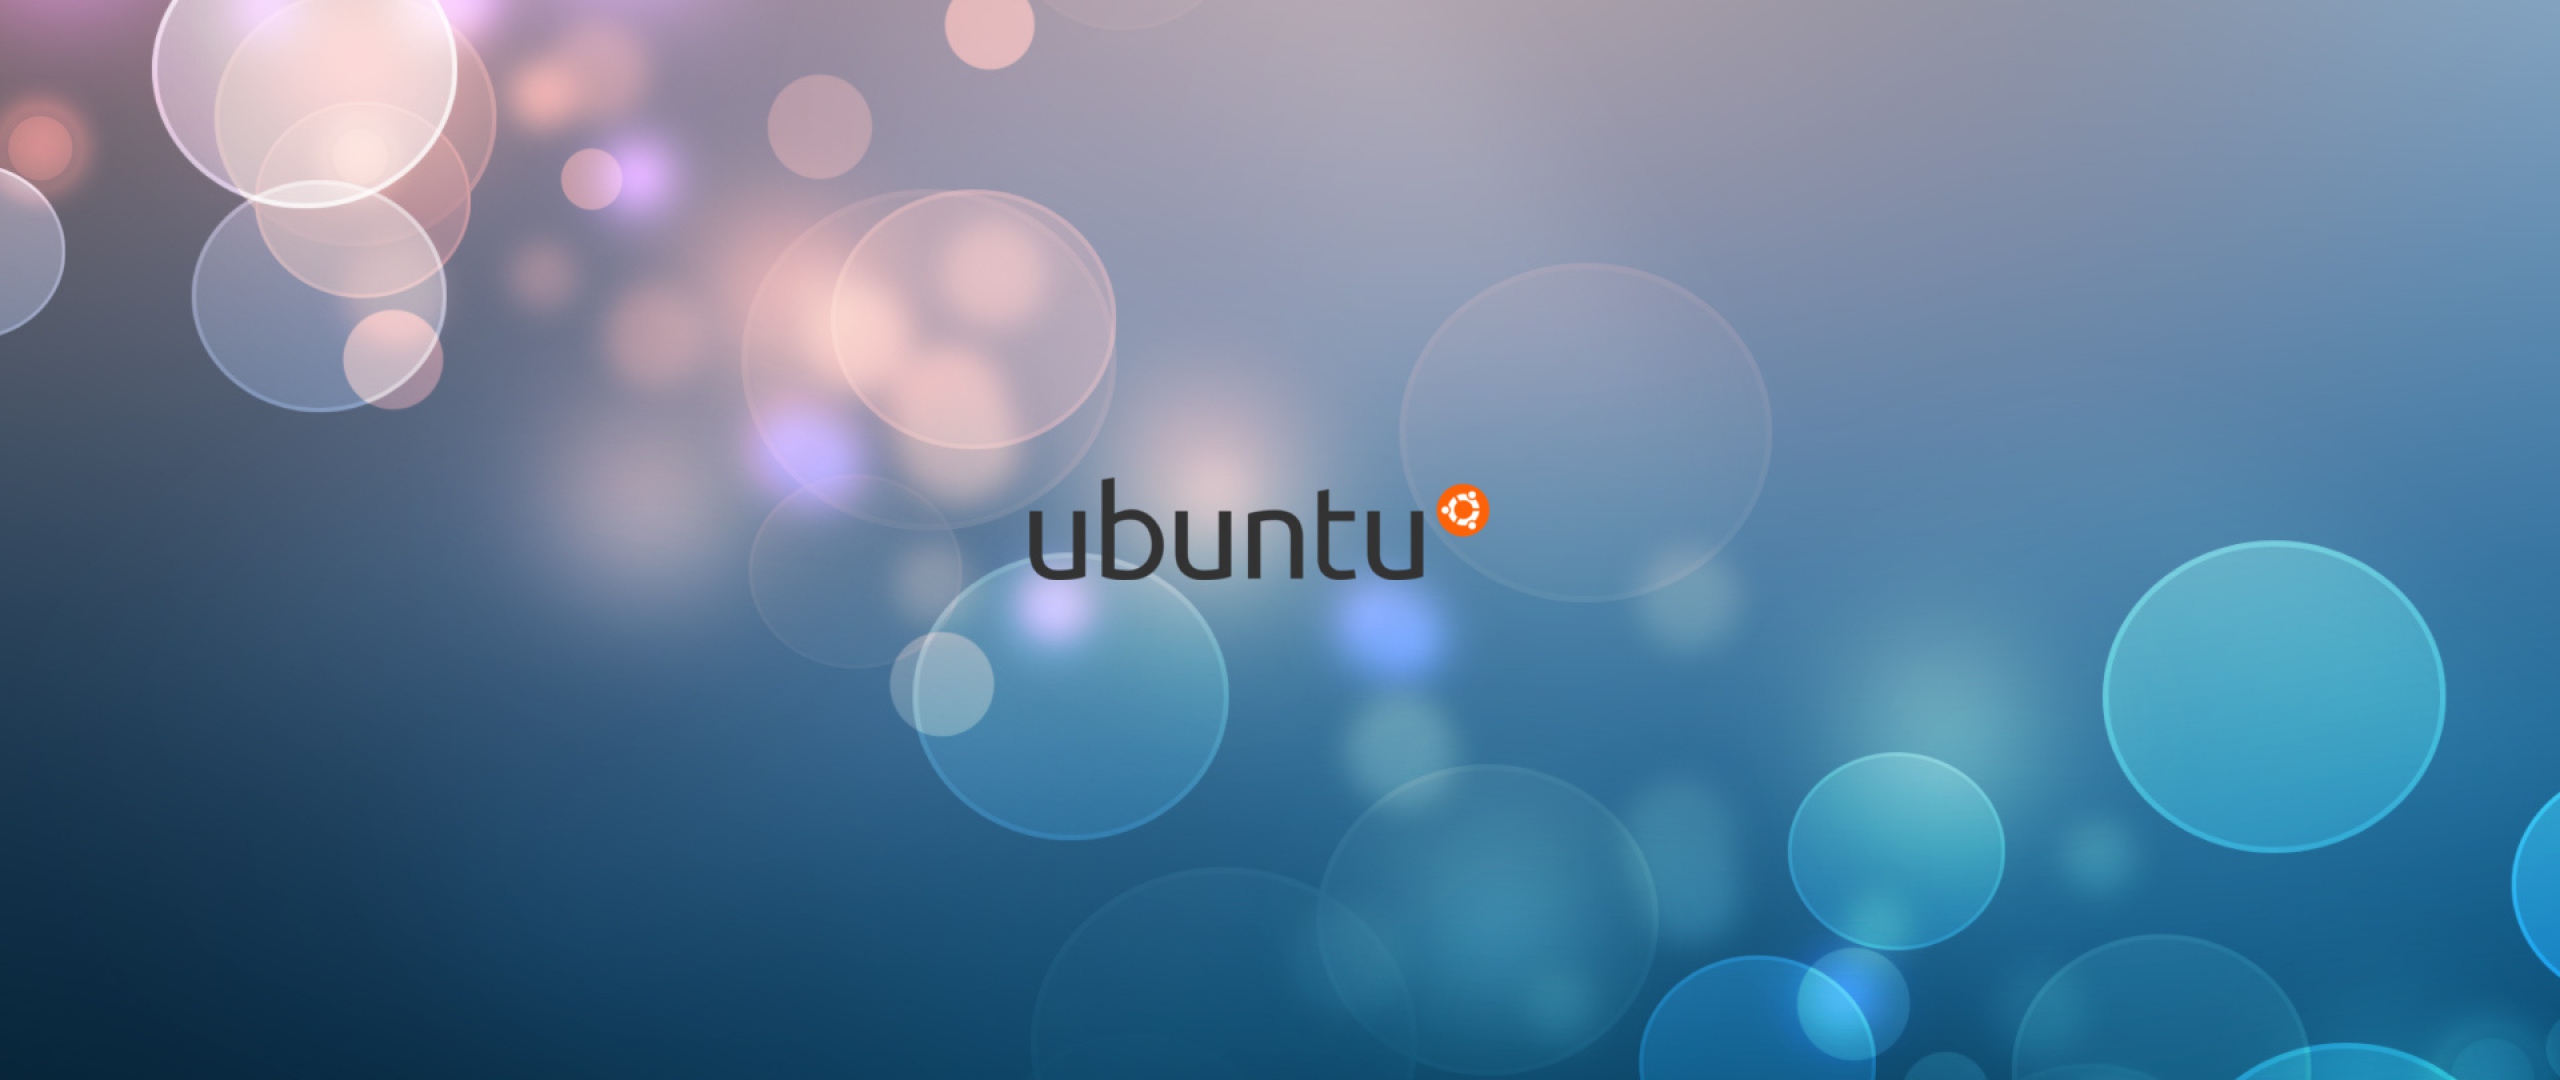 Ubuntu Desktop Wallpapers